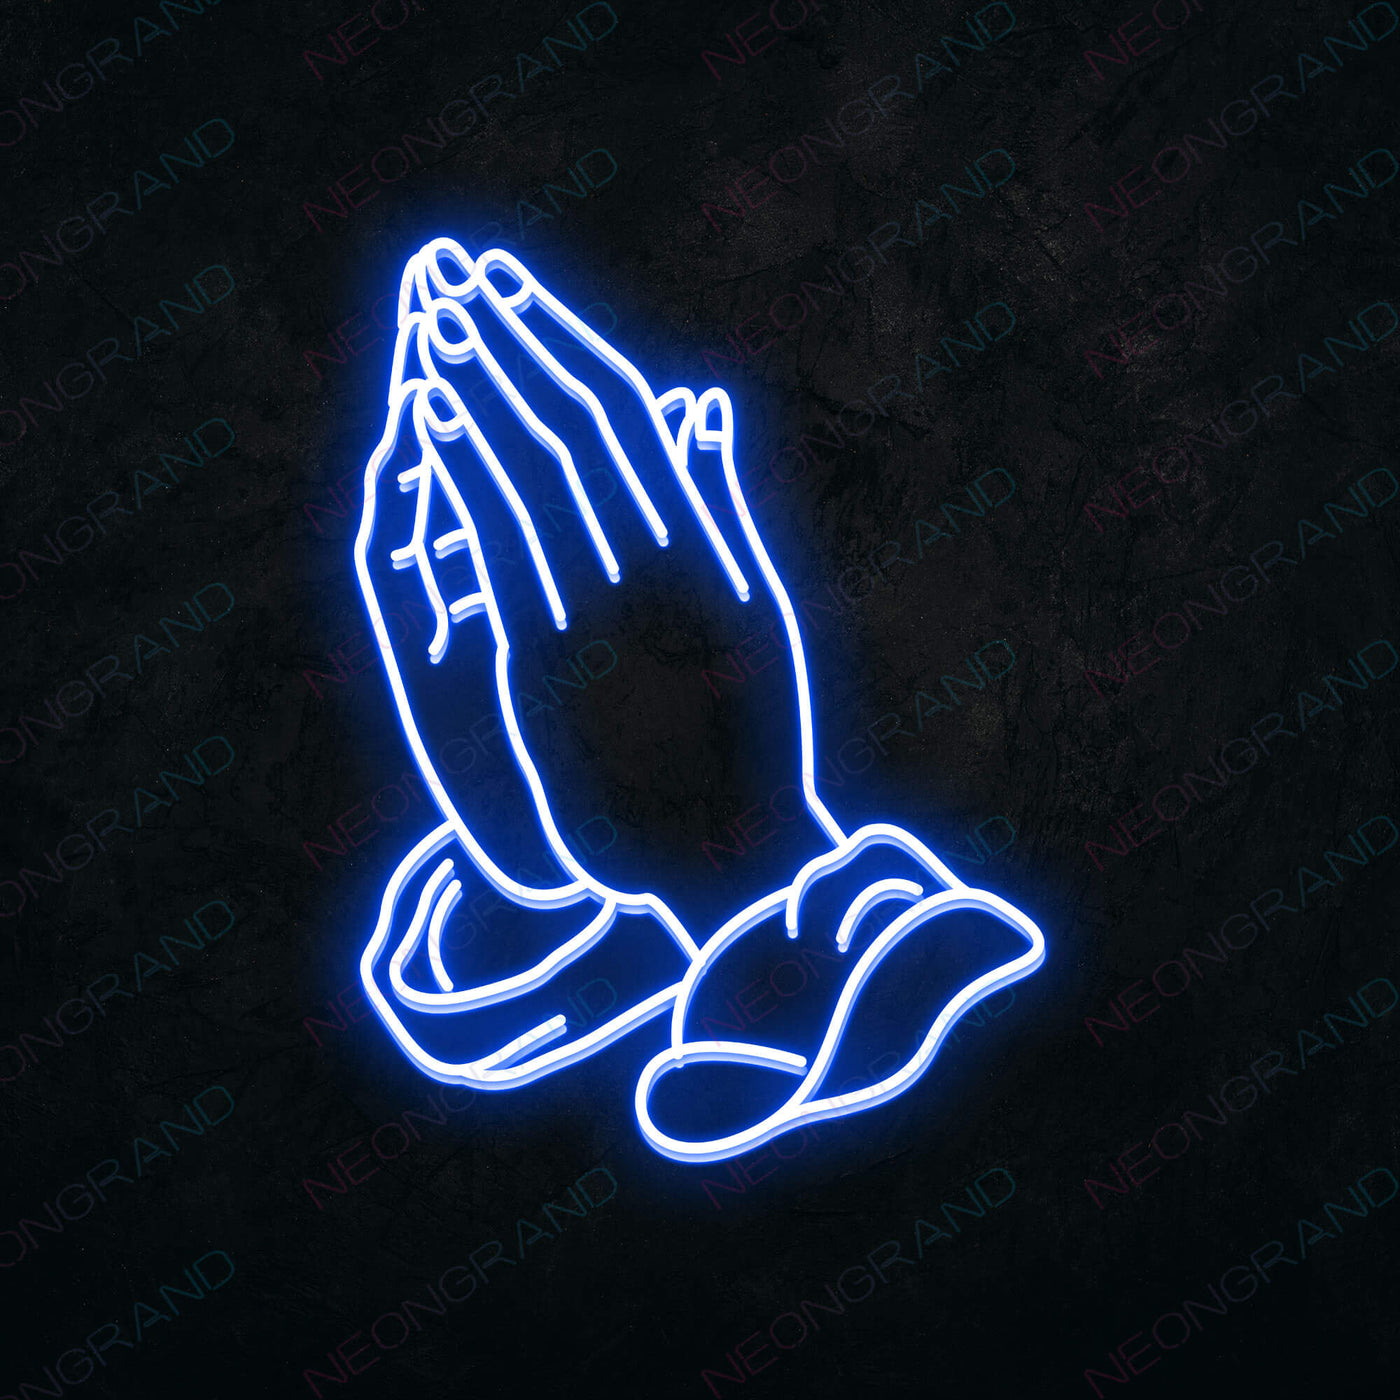 Neon Praying Hands Sign Led Light blue